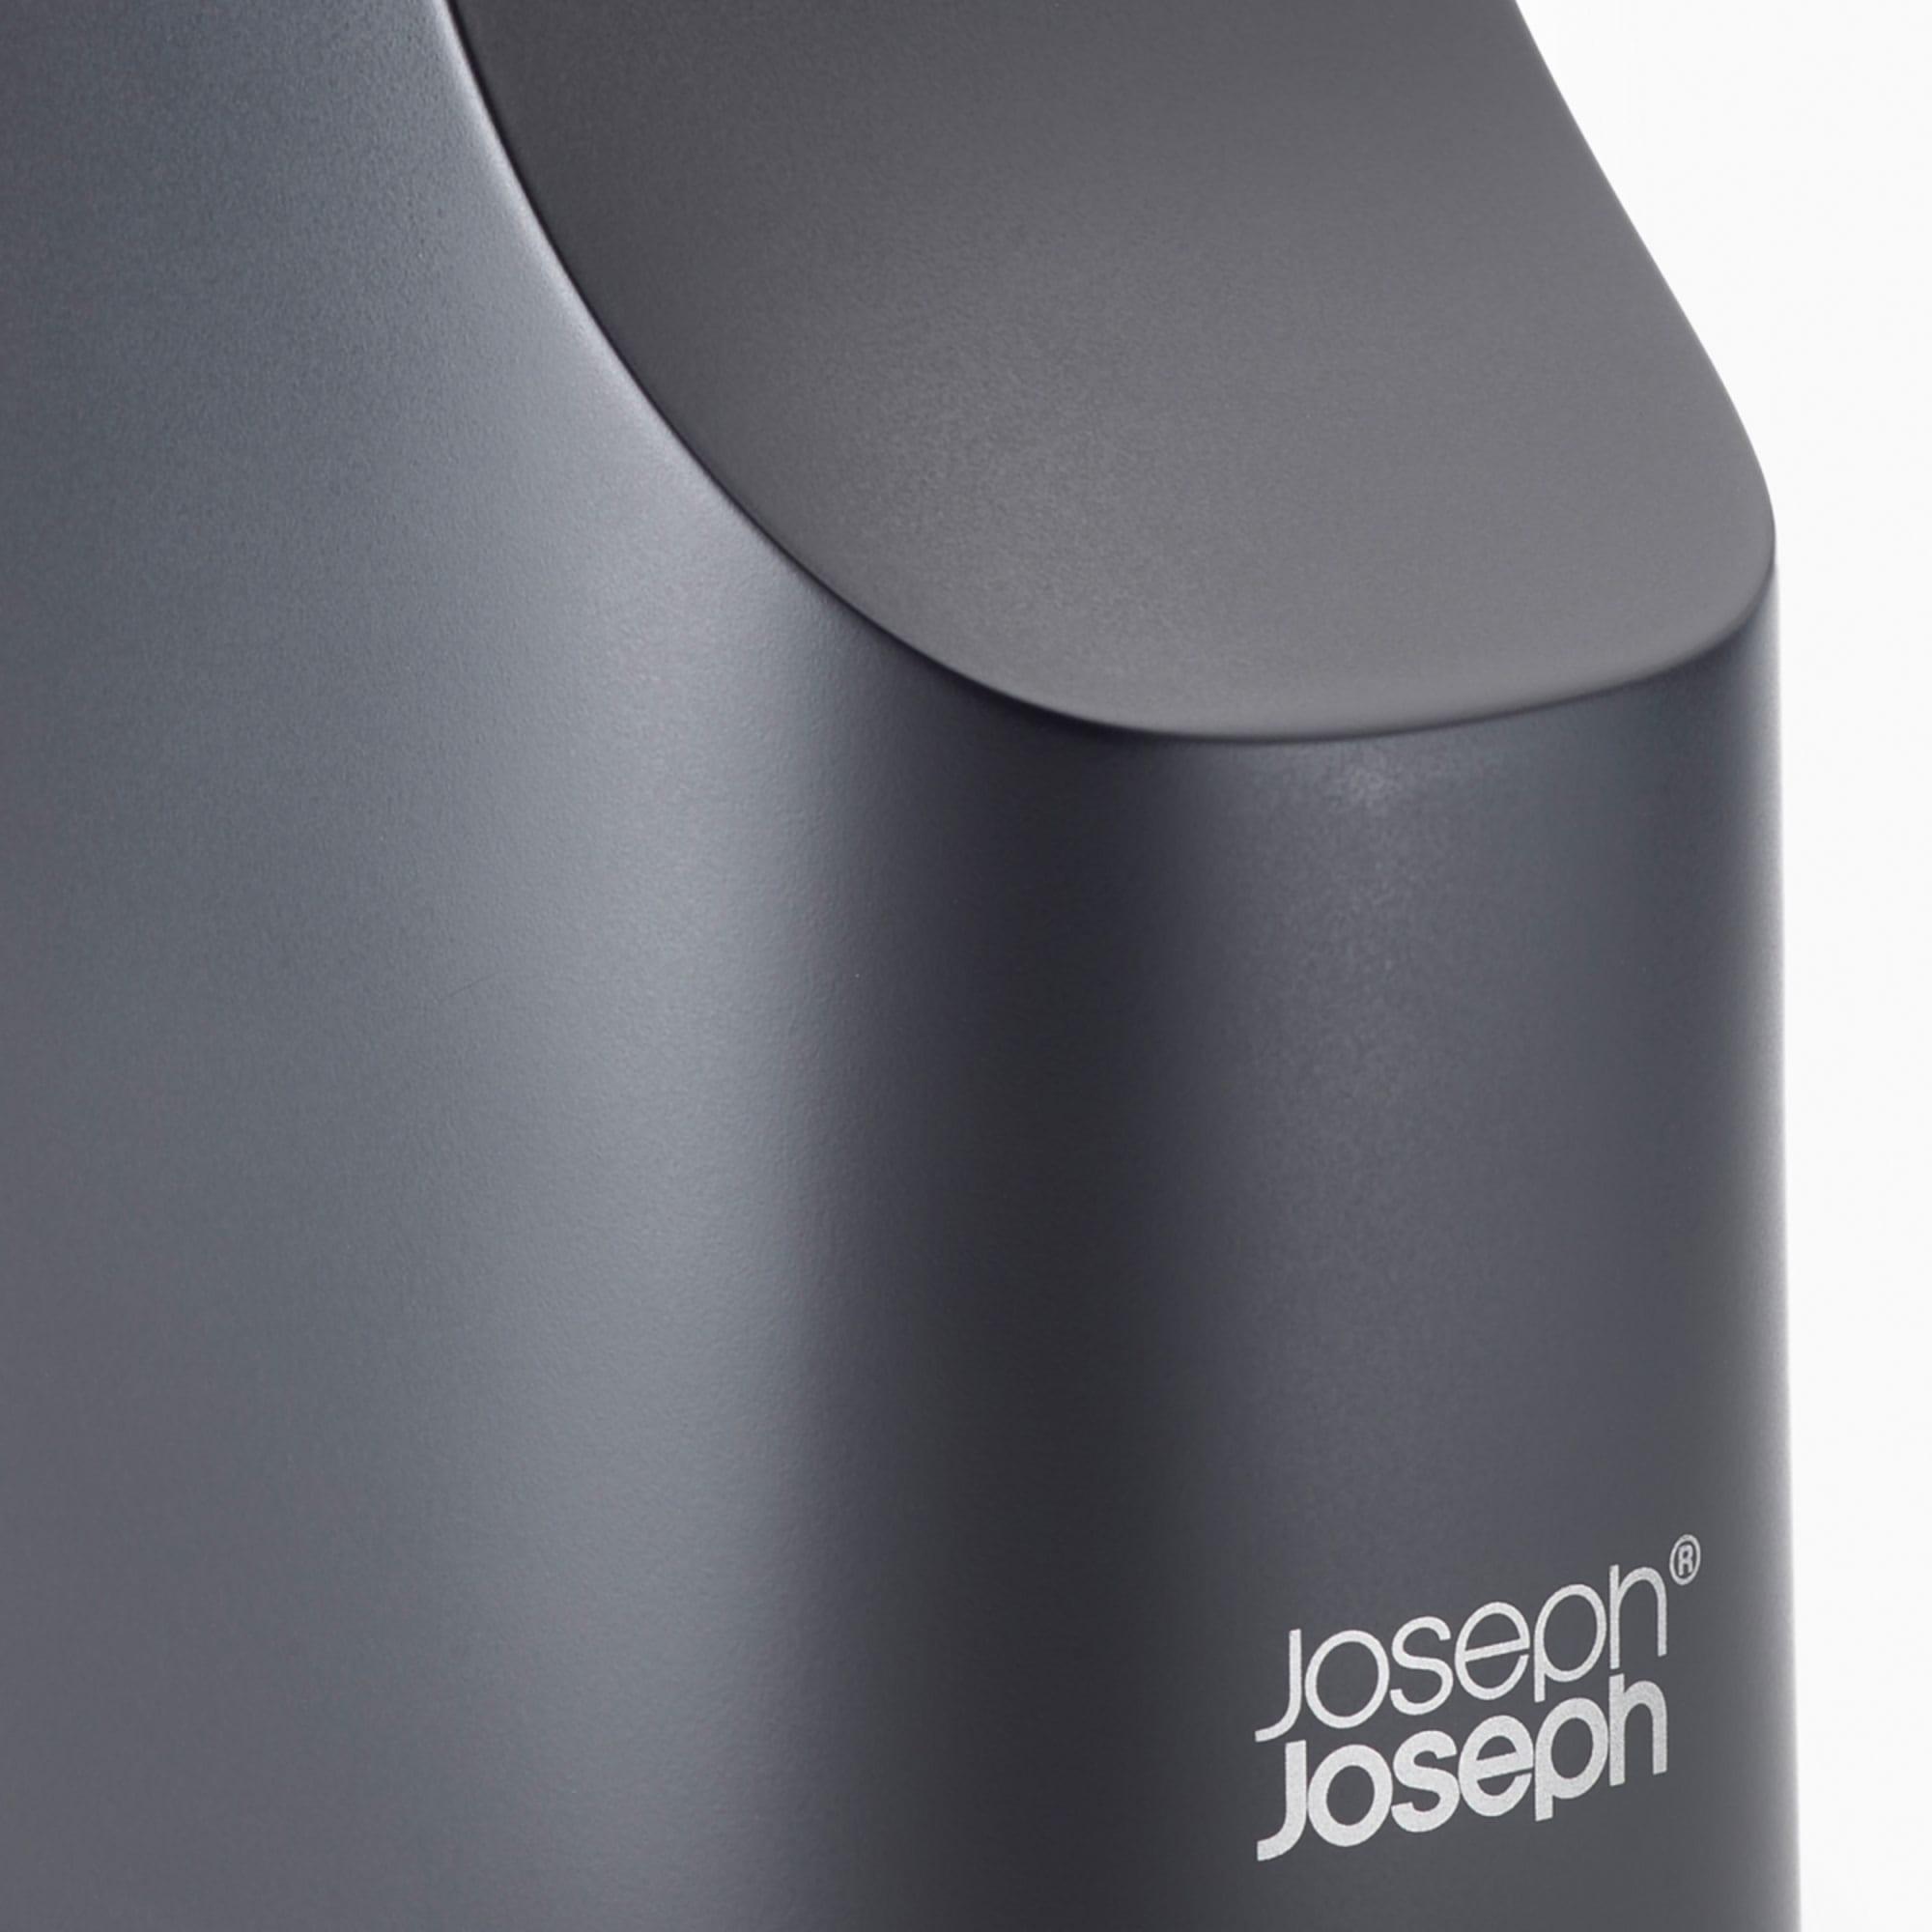 Joseph Joseph Slim Compact Soap Pump Black Image 8